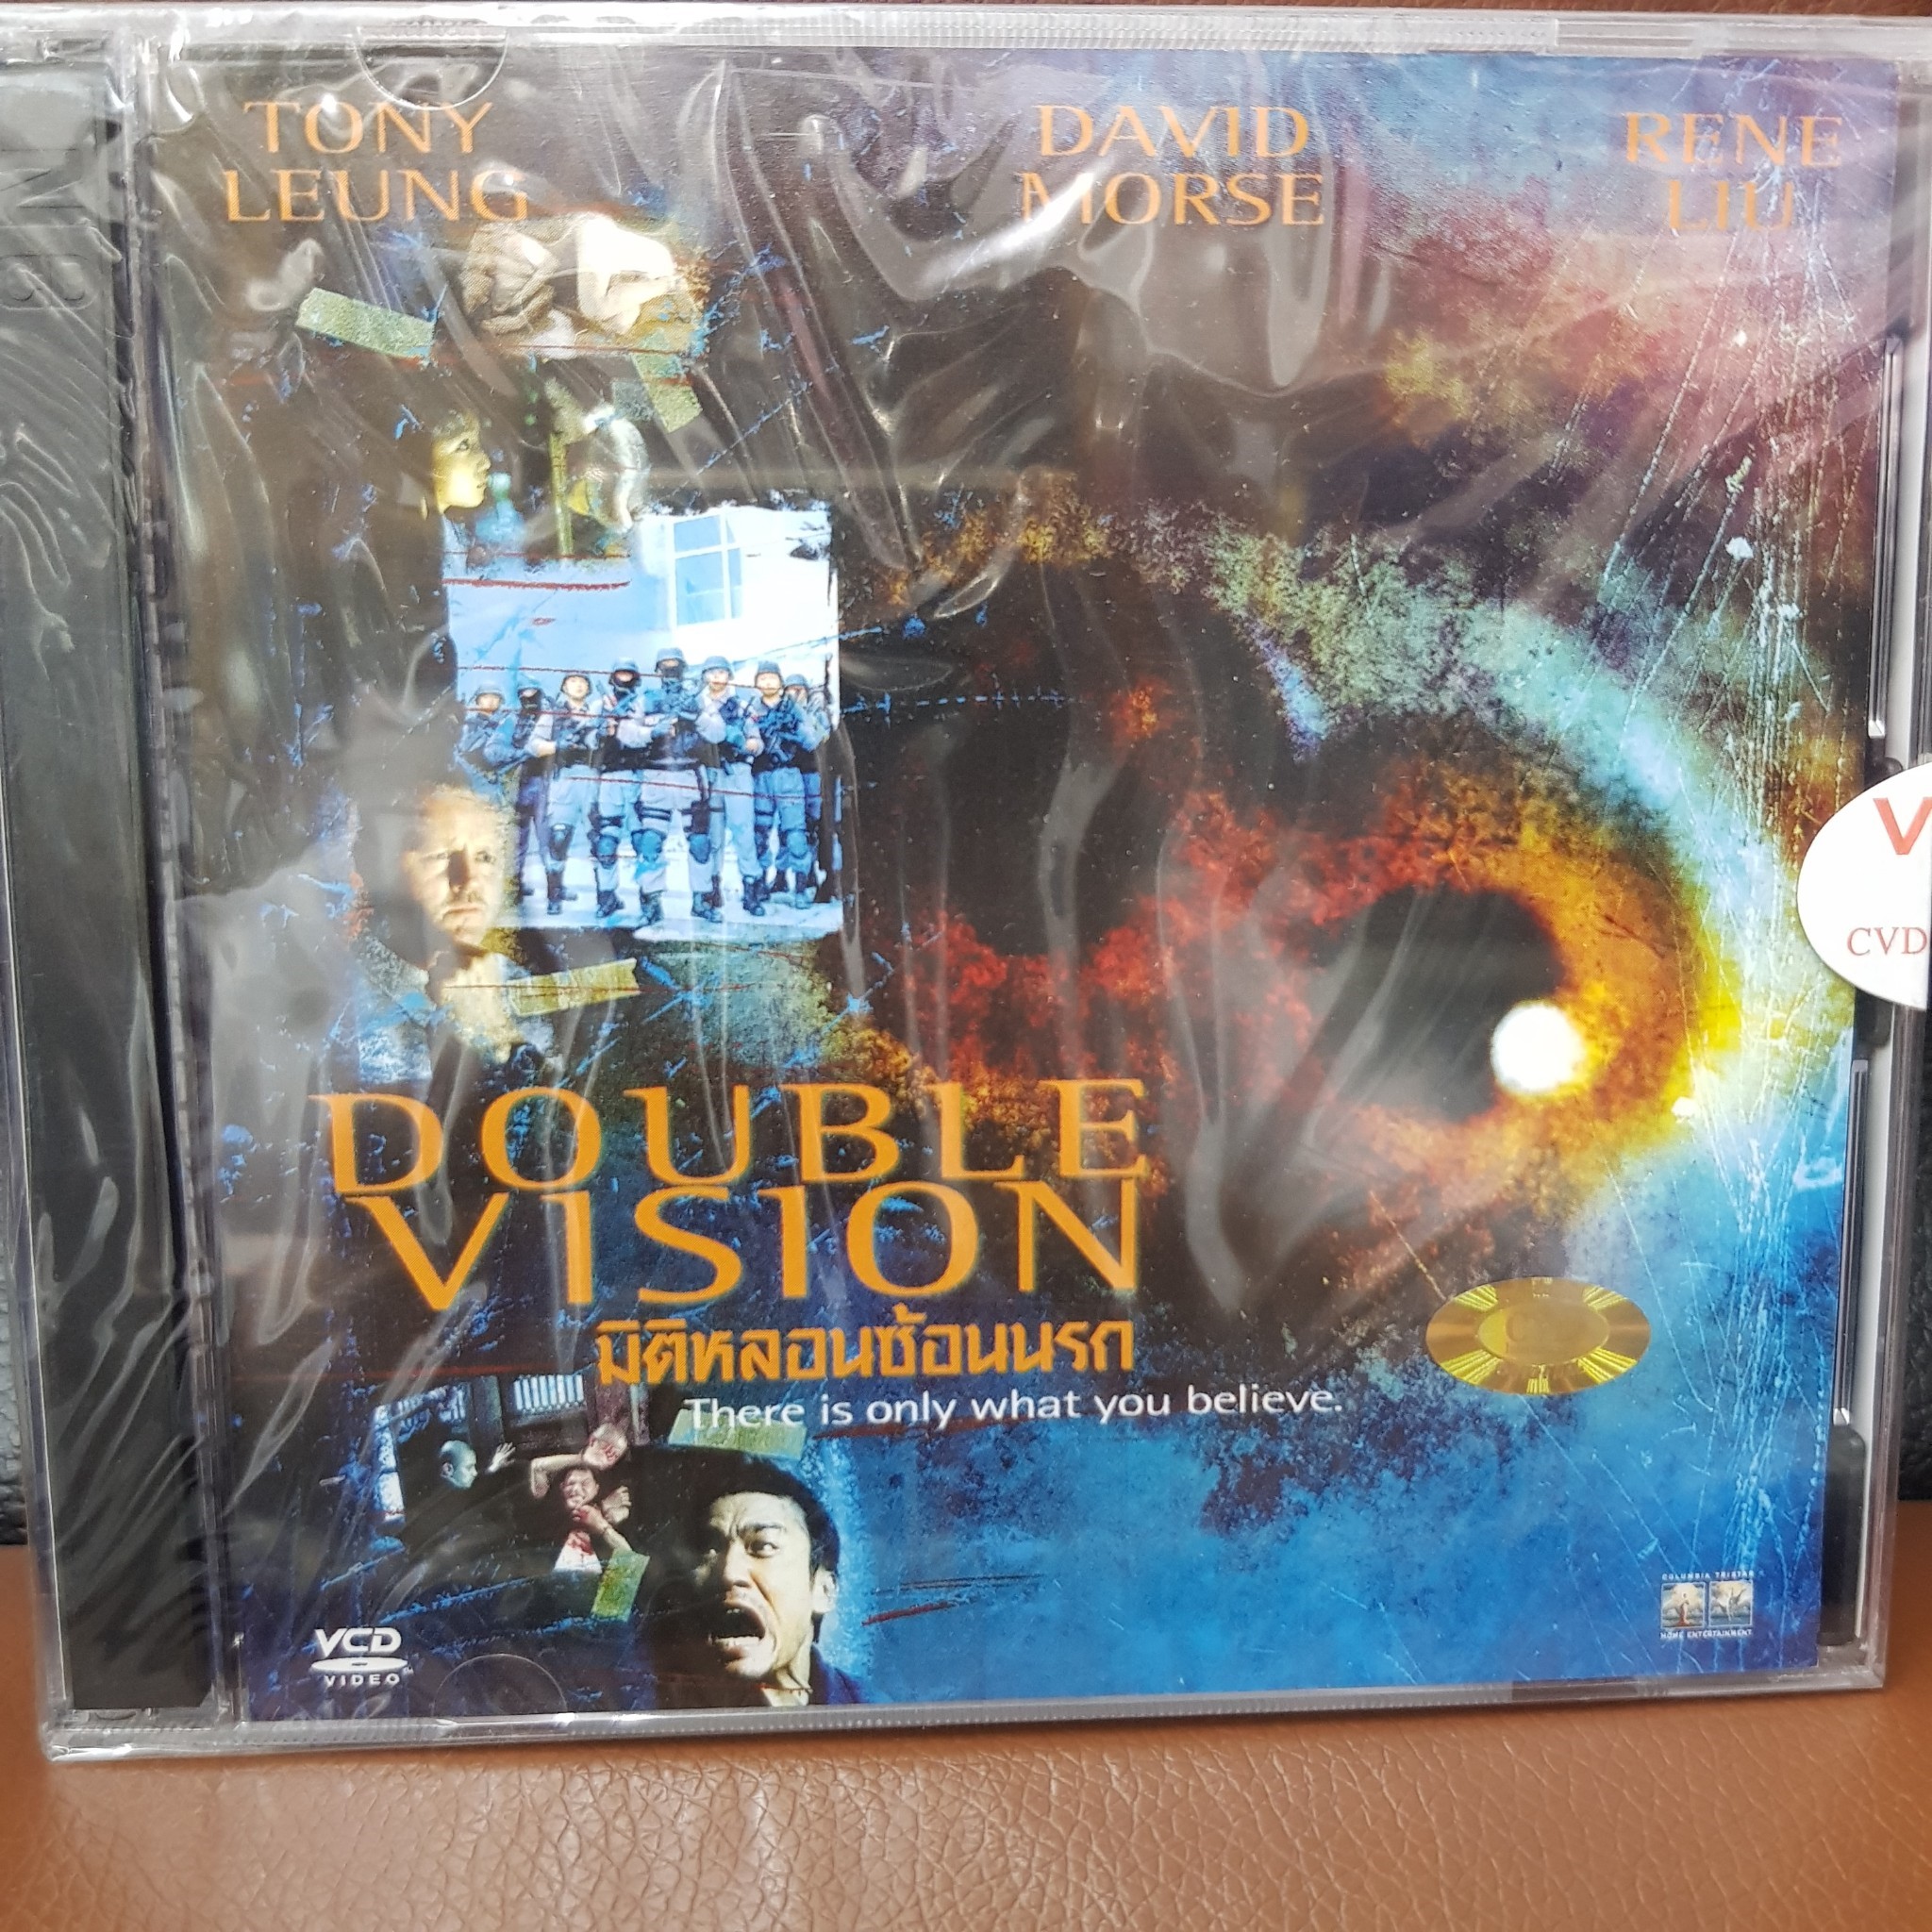 VCD DOUBLE VISION มิติหลอนซ้อนนรก พากย์ไทย (SBYVCD59-มิติหลอนซ้อนรก) หนังสยองขวัญ สั่นประสาท หนังเก่า หายาก วีซีดี ลดราคา ดูหนัง ลิขสิทธิื มาสเตอร์แท้ ภาพยนตร์ cinema theater STARMART